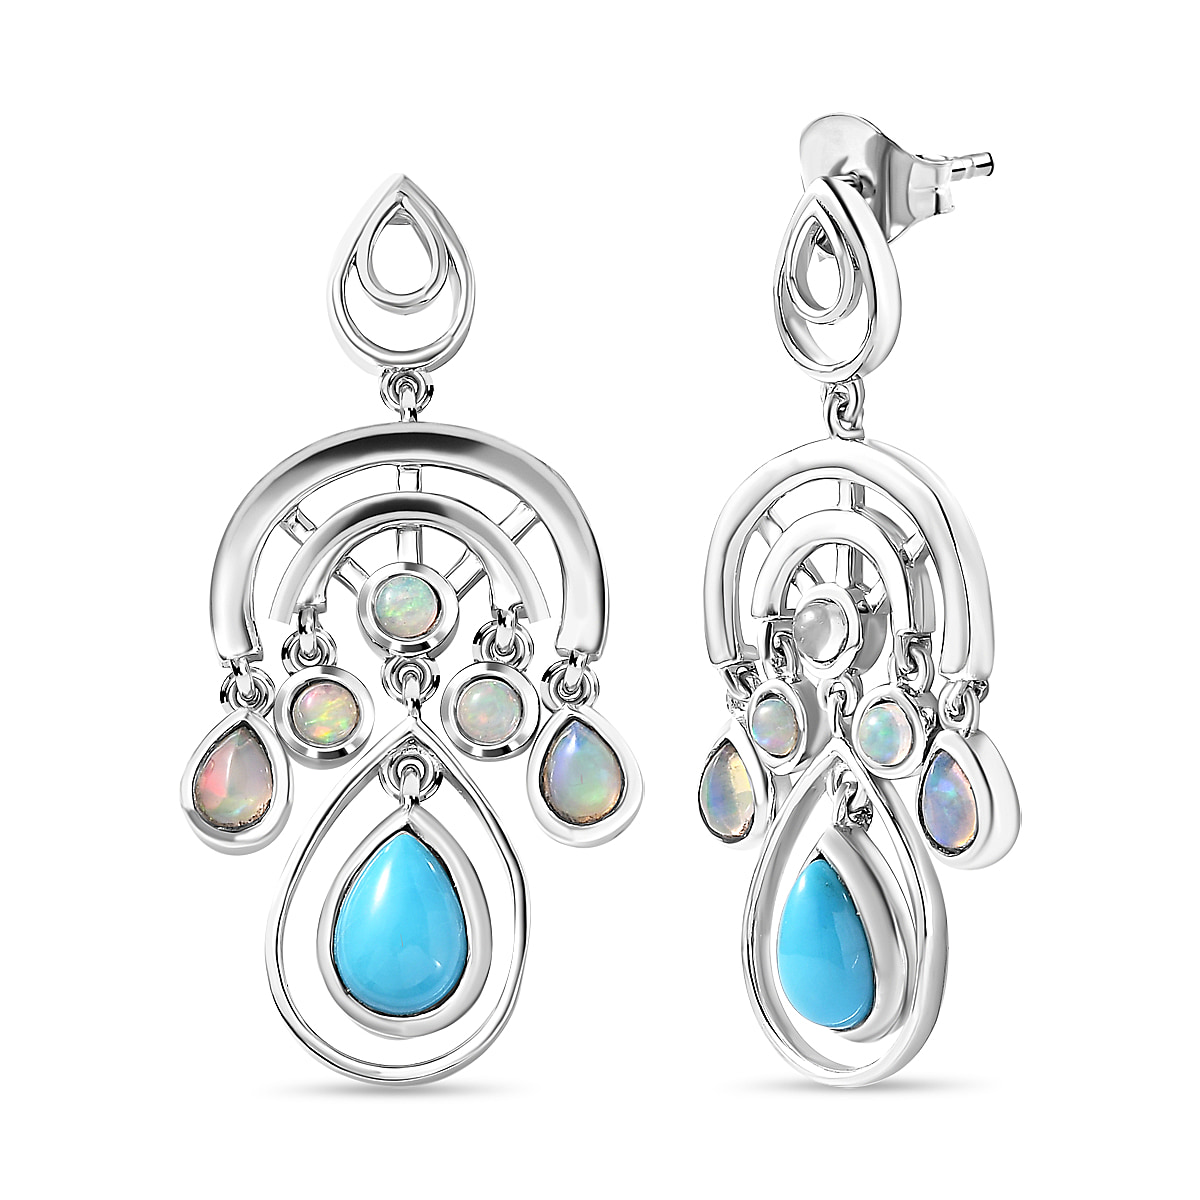 Arizona Sleeping Beauty Turquoise & Ethiopian Welo Opal Dangle Earrings in Platinum Overlay Sterling Silver 2.06 Ct, Silver Wt. 5.74 Gms